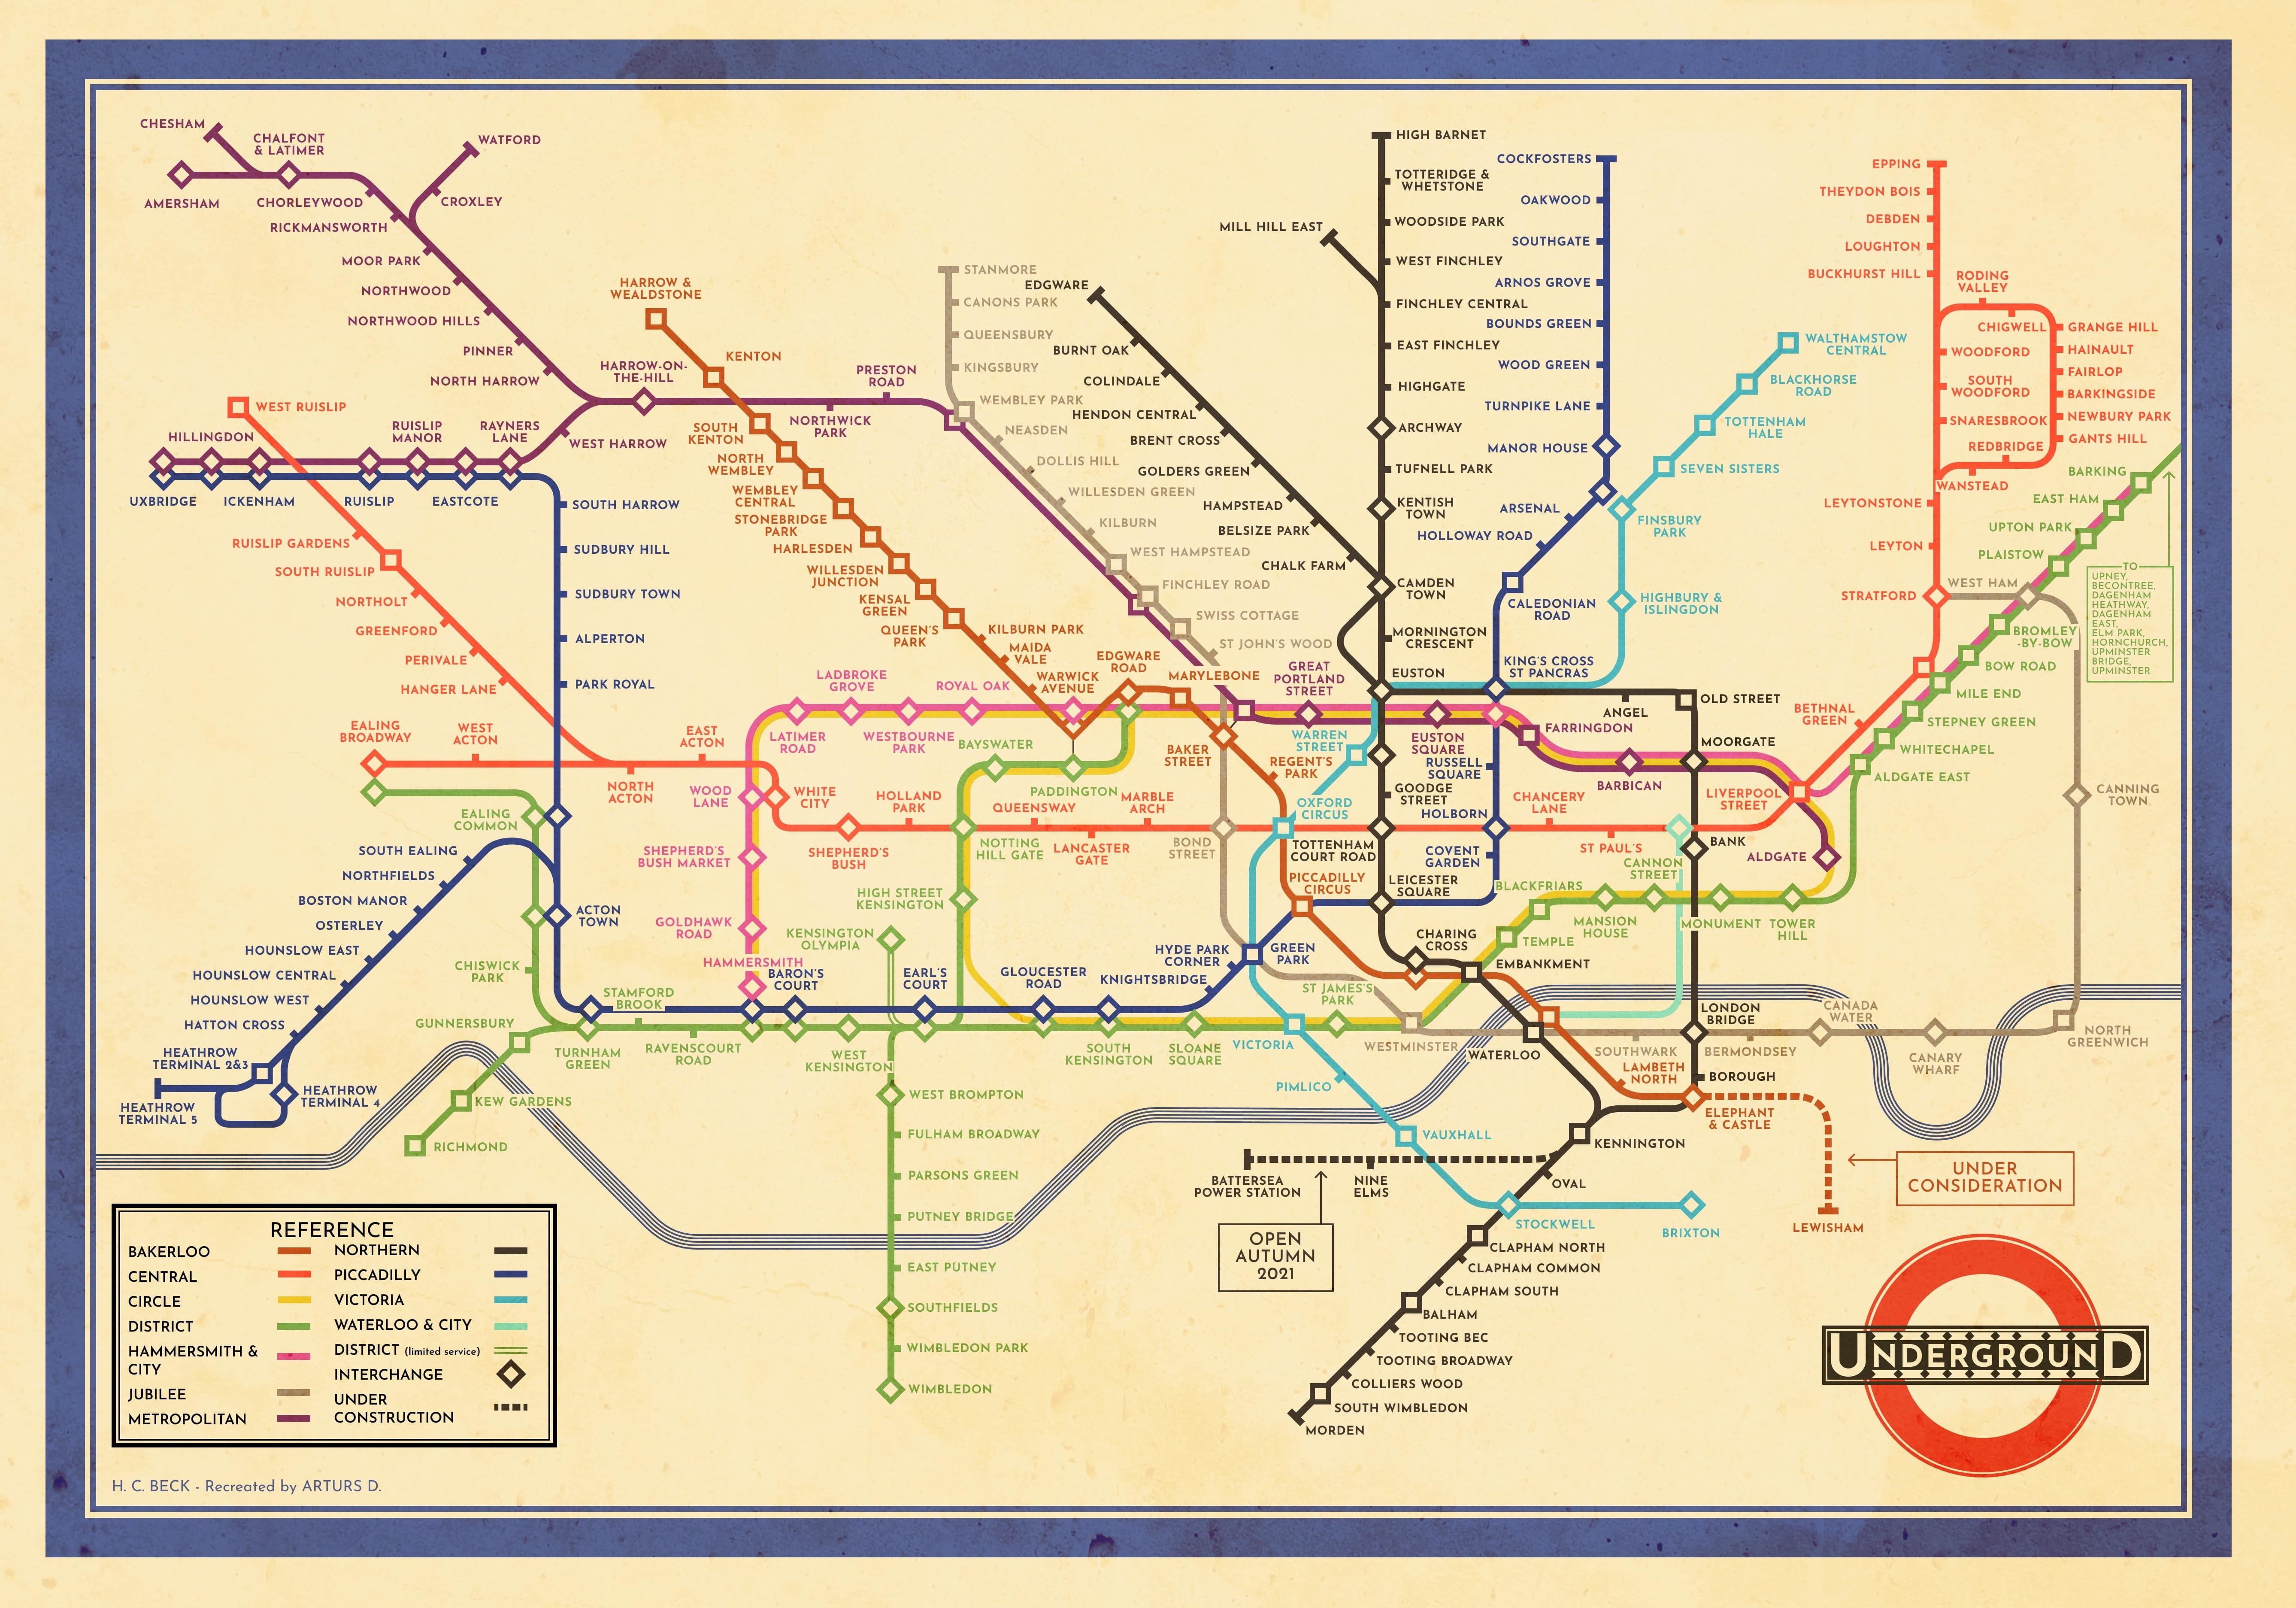 London underground plan by Harry Beck (1933)